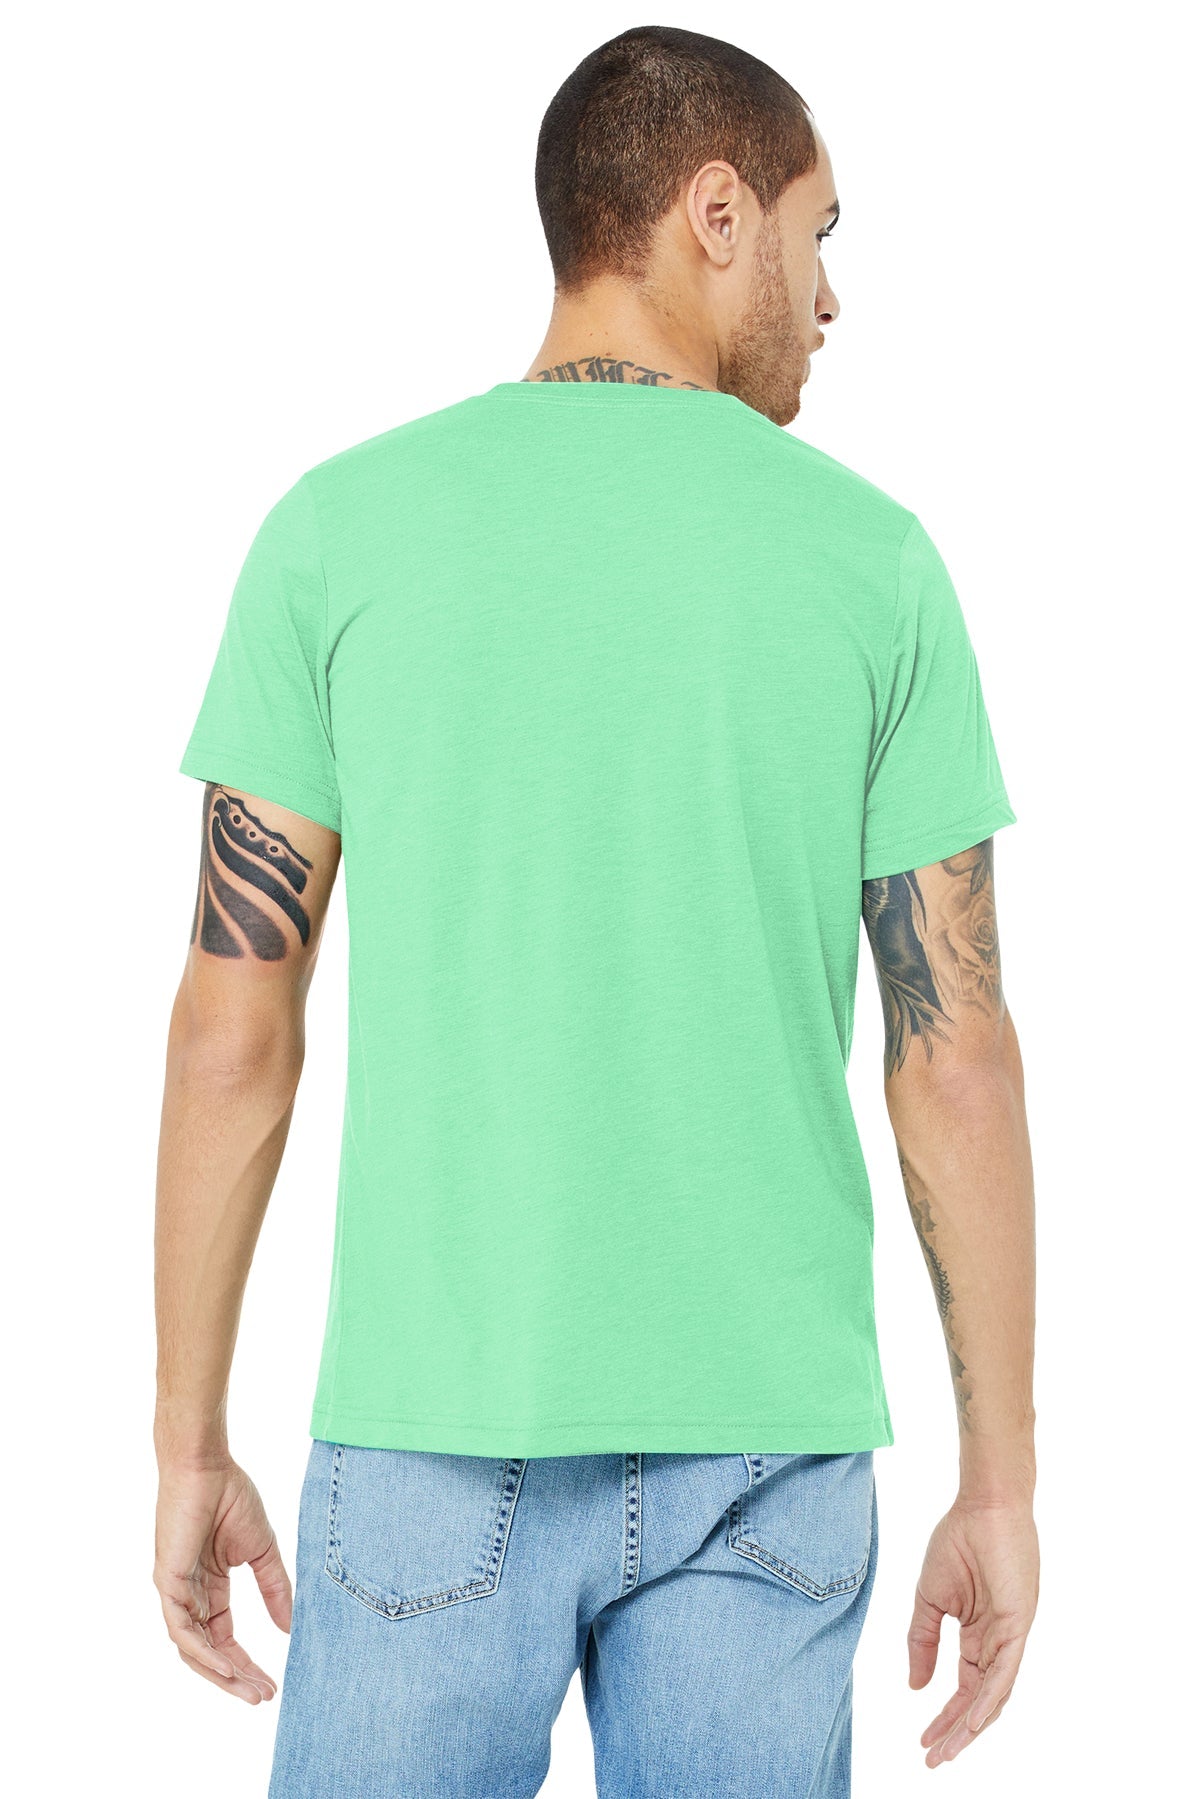 bella + canvas unisex triblend short sleeve t-shirt 3413c mint triblend